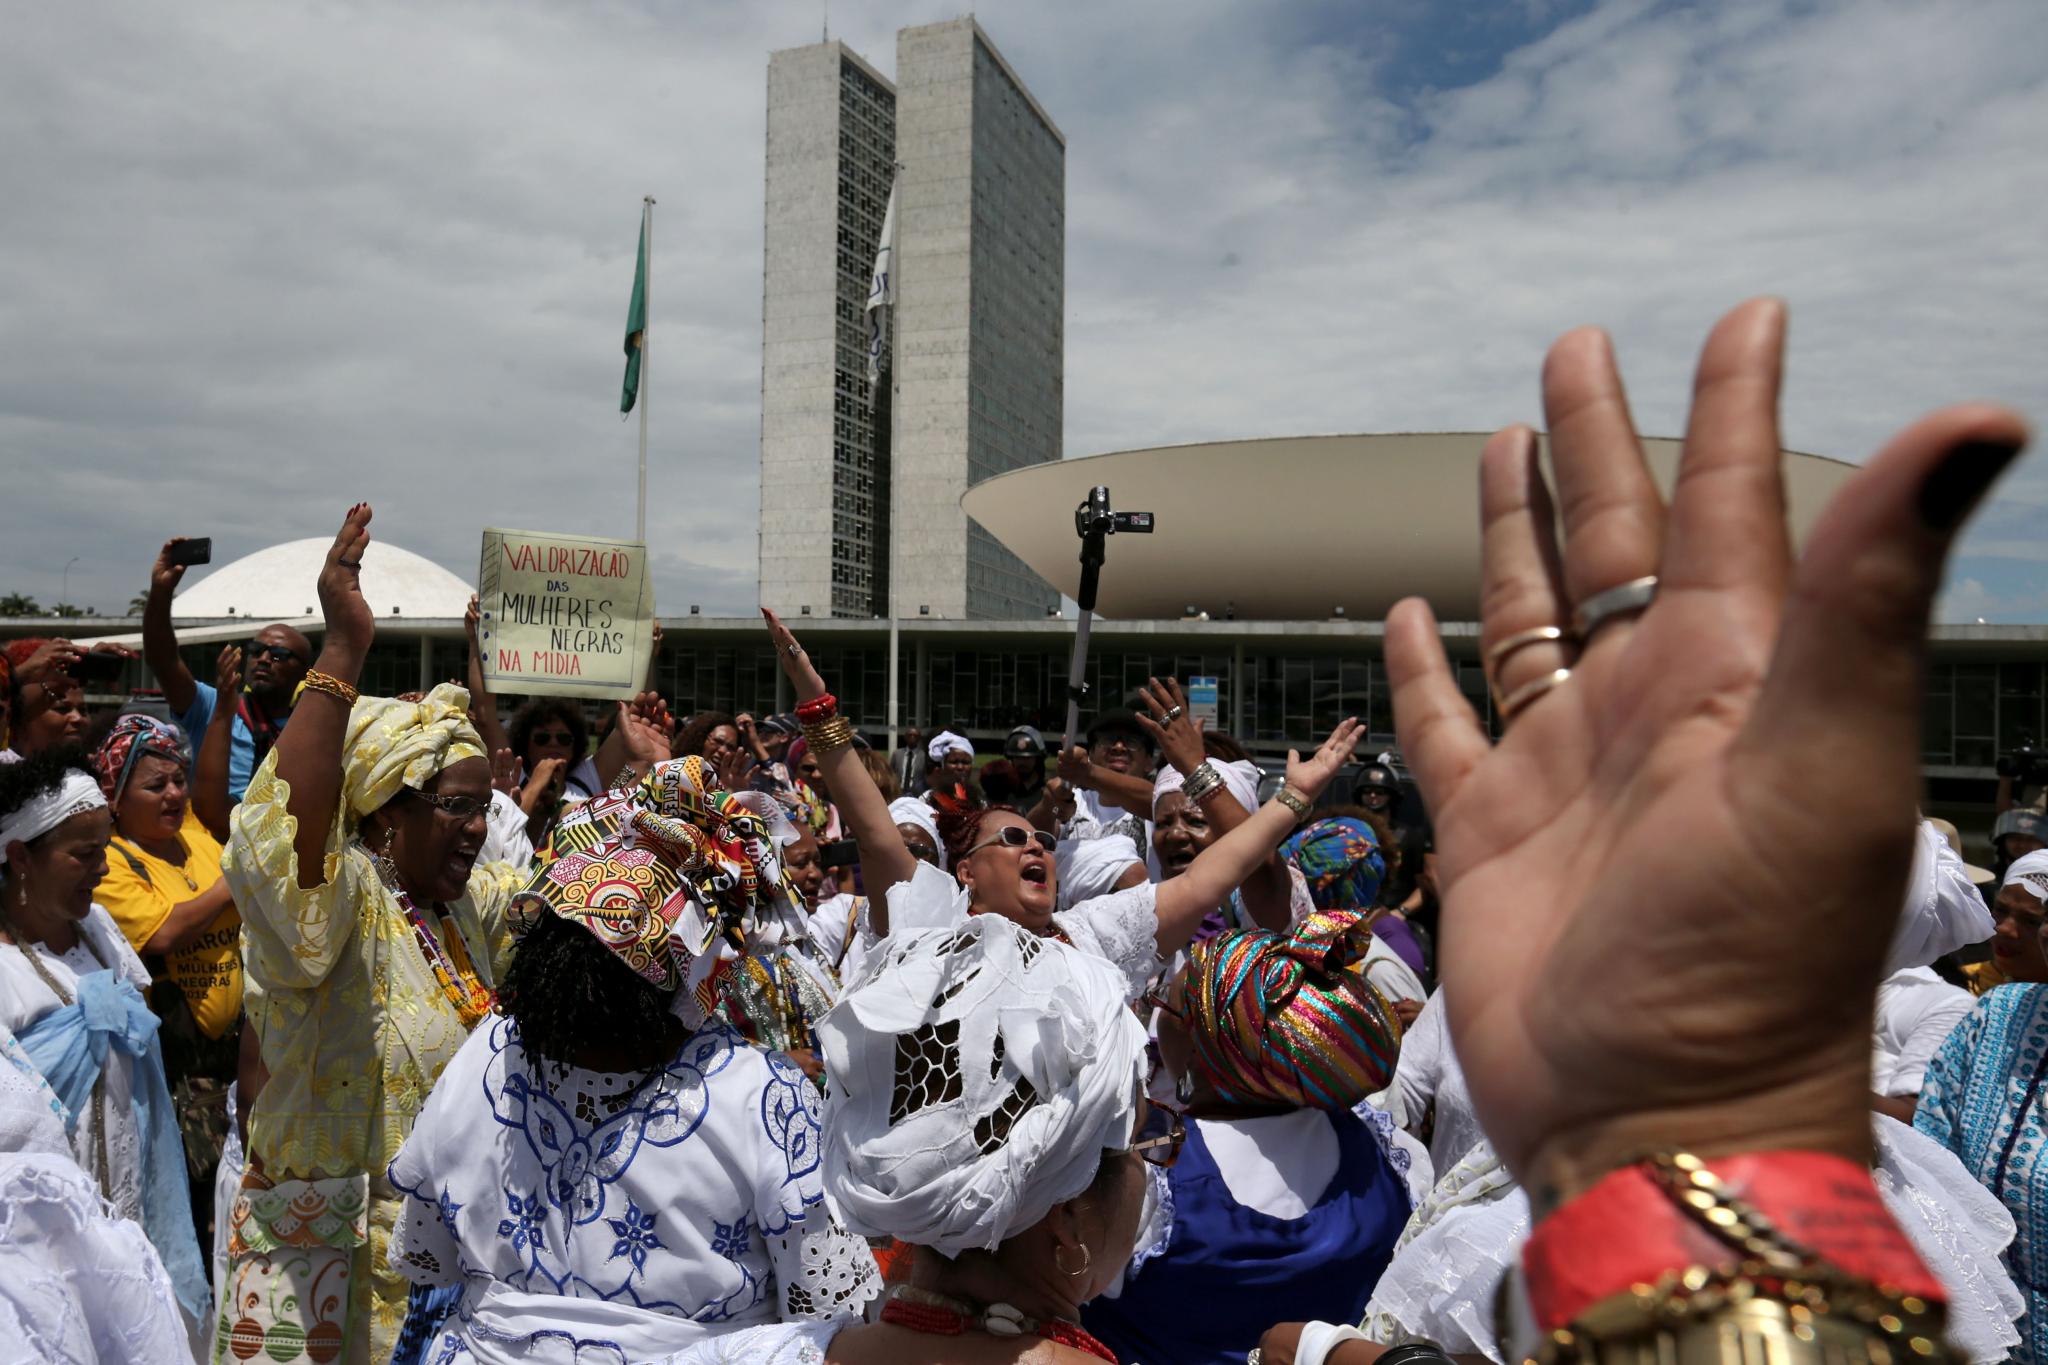 Brazil's First Black Women's March Draws Thousands